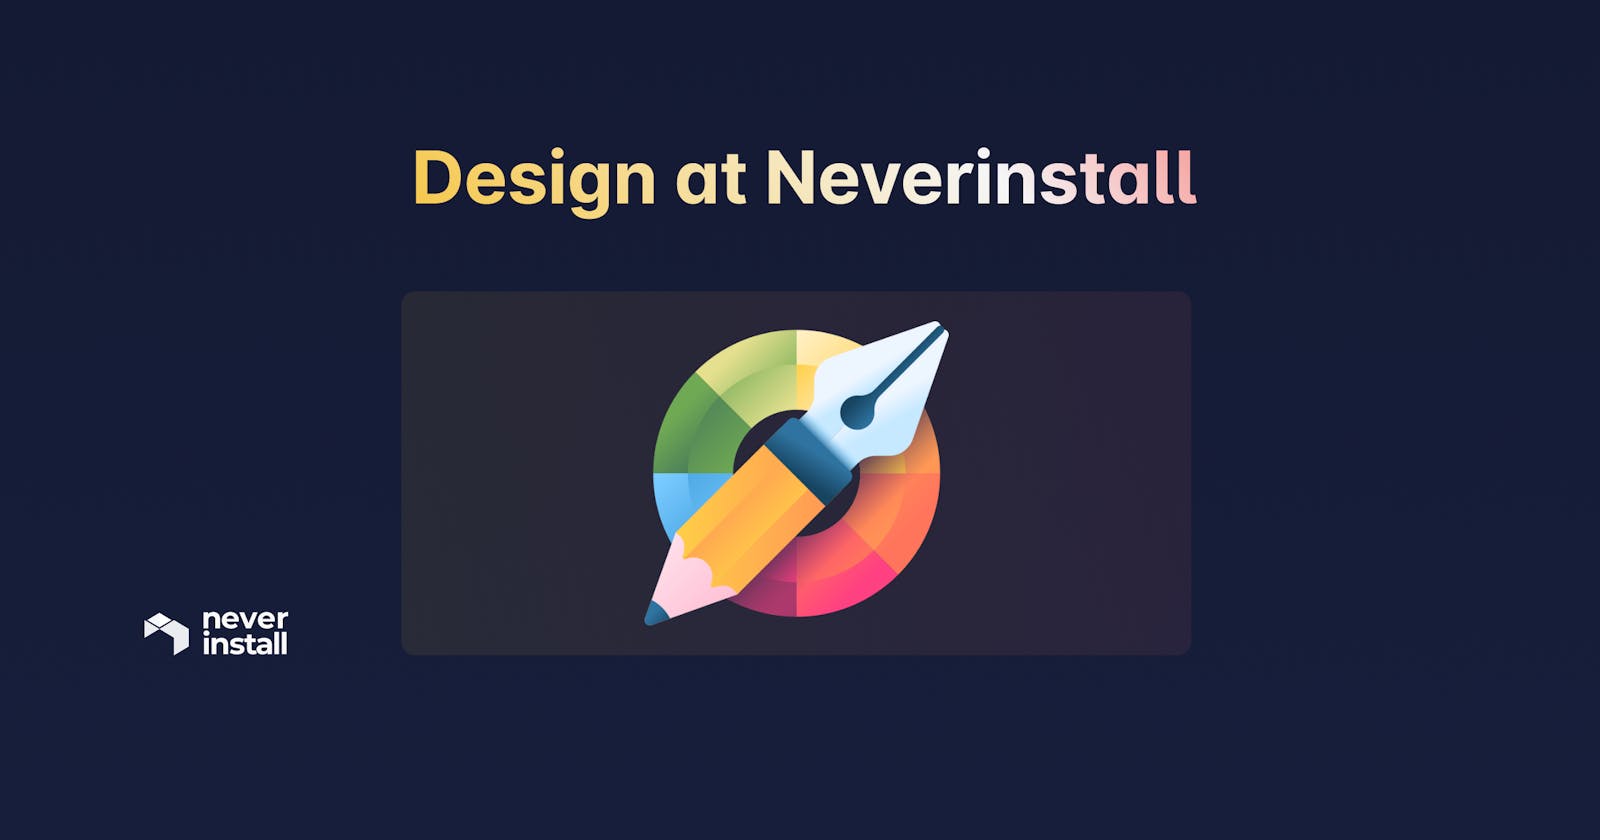 Design at Neverinstall